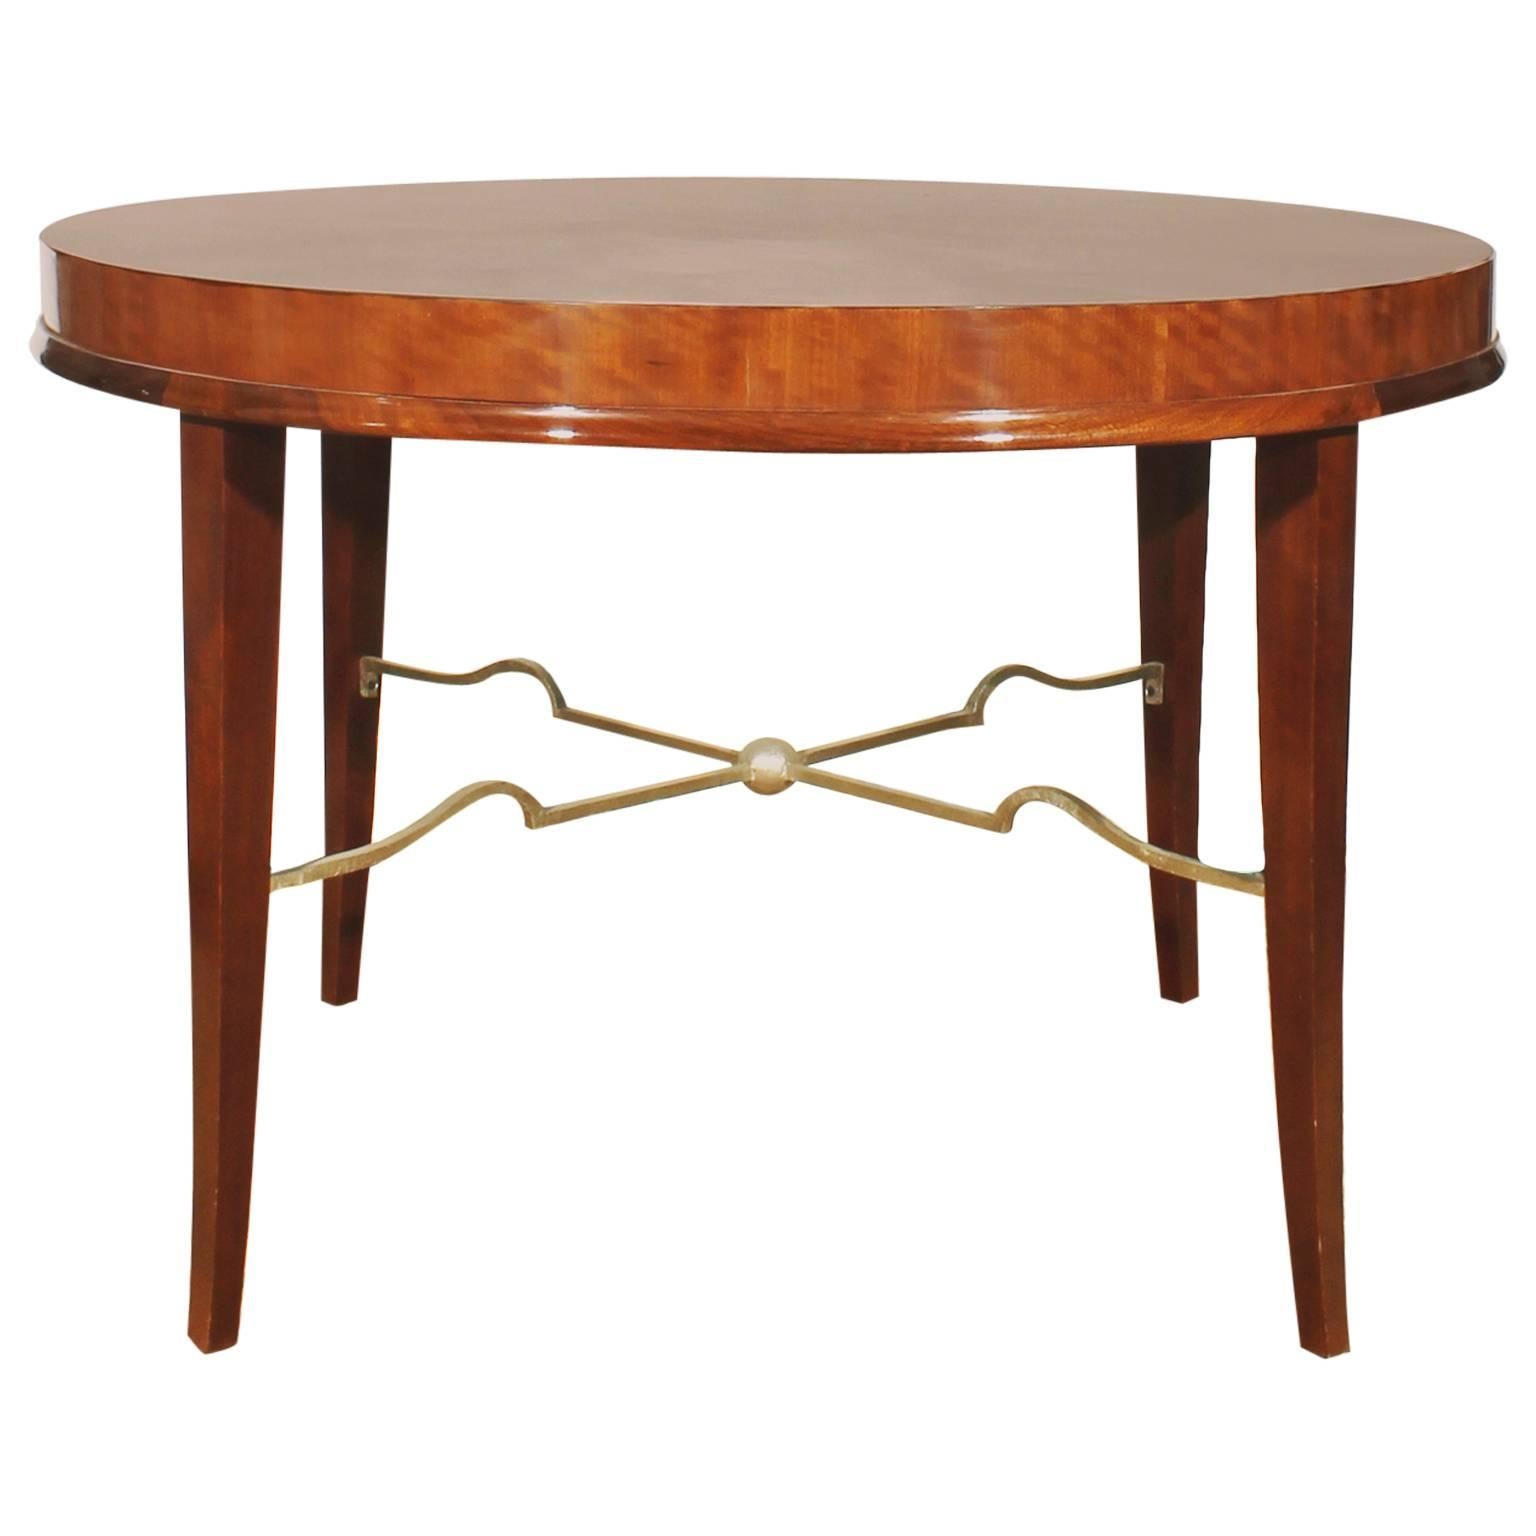 1940s Round sidetable by De Coene, mahogany, gilded spacer - Belgium